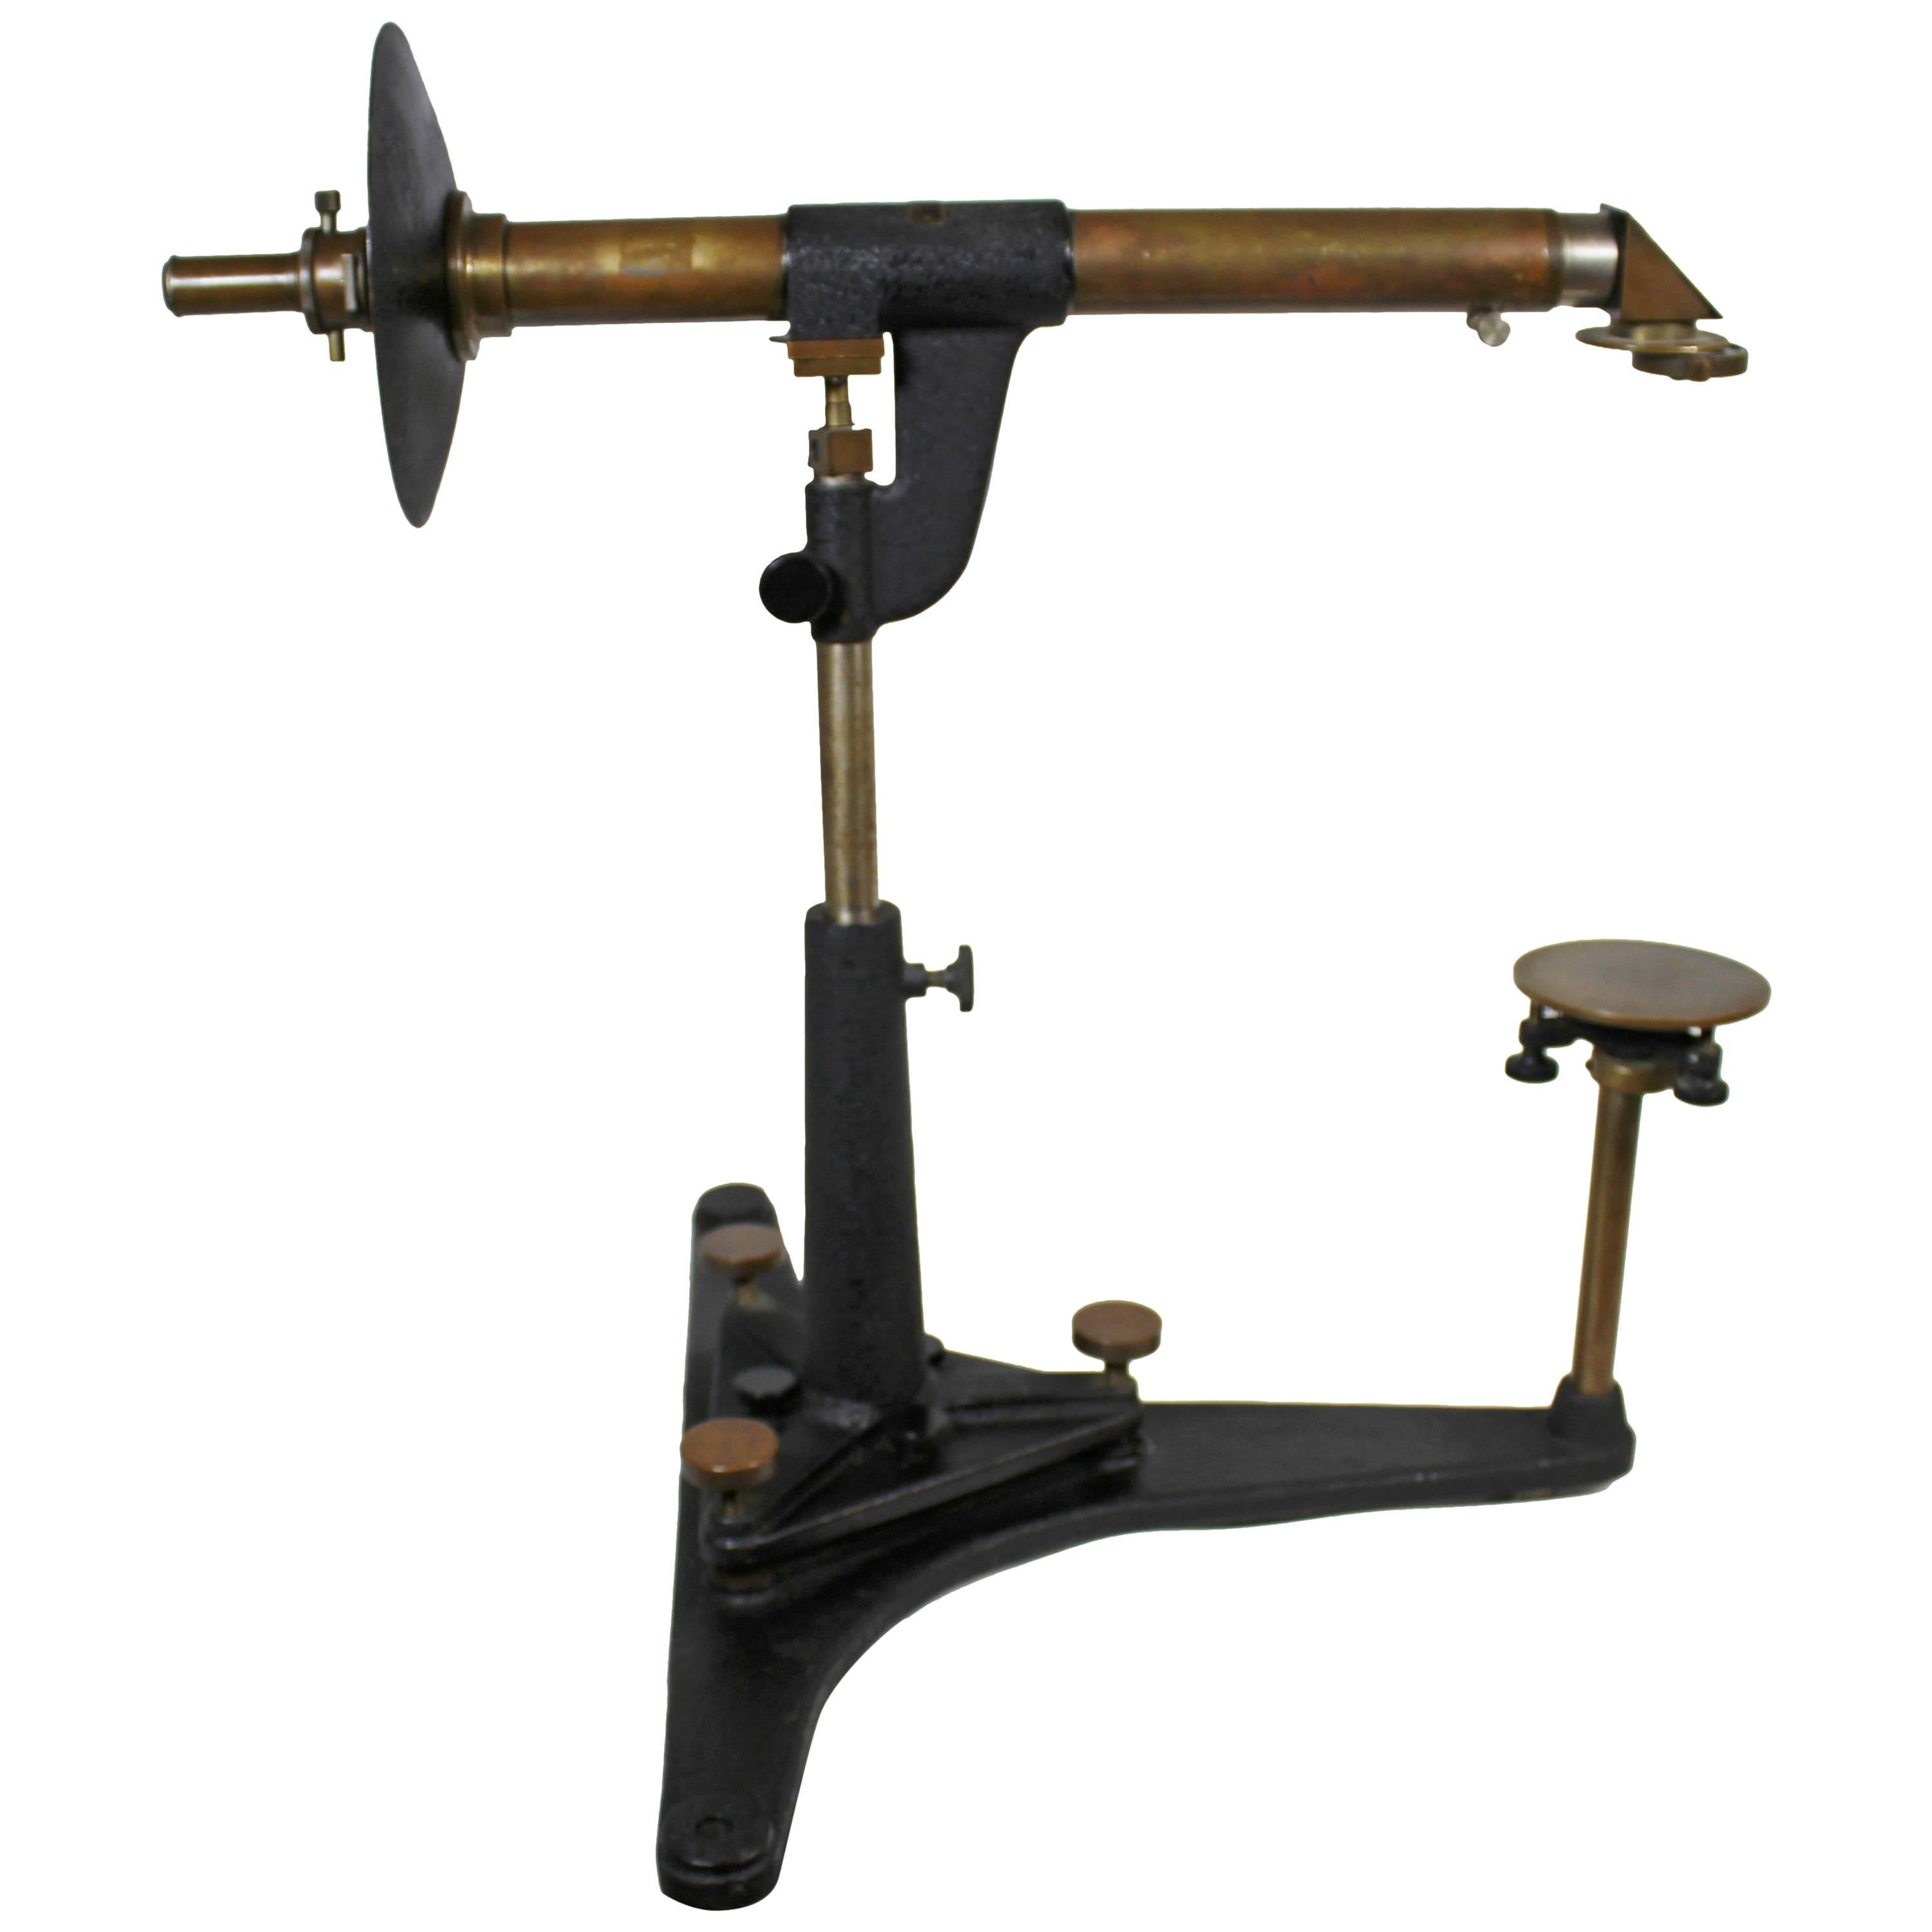 Gaertner Spectroscope, 1930s Scientific Instrument For Sale